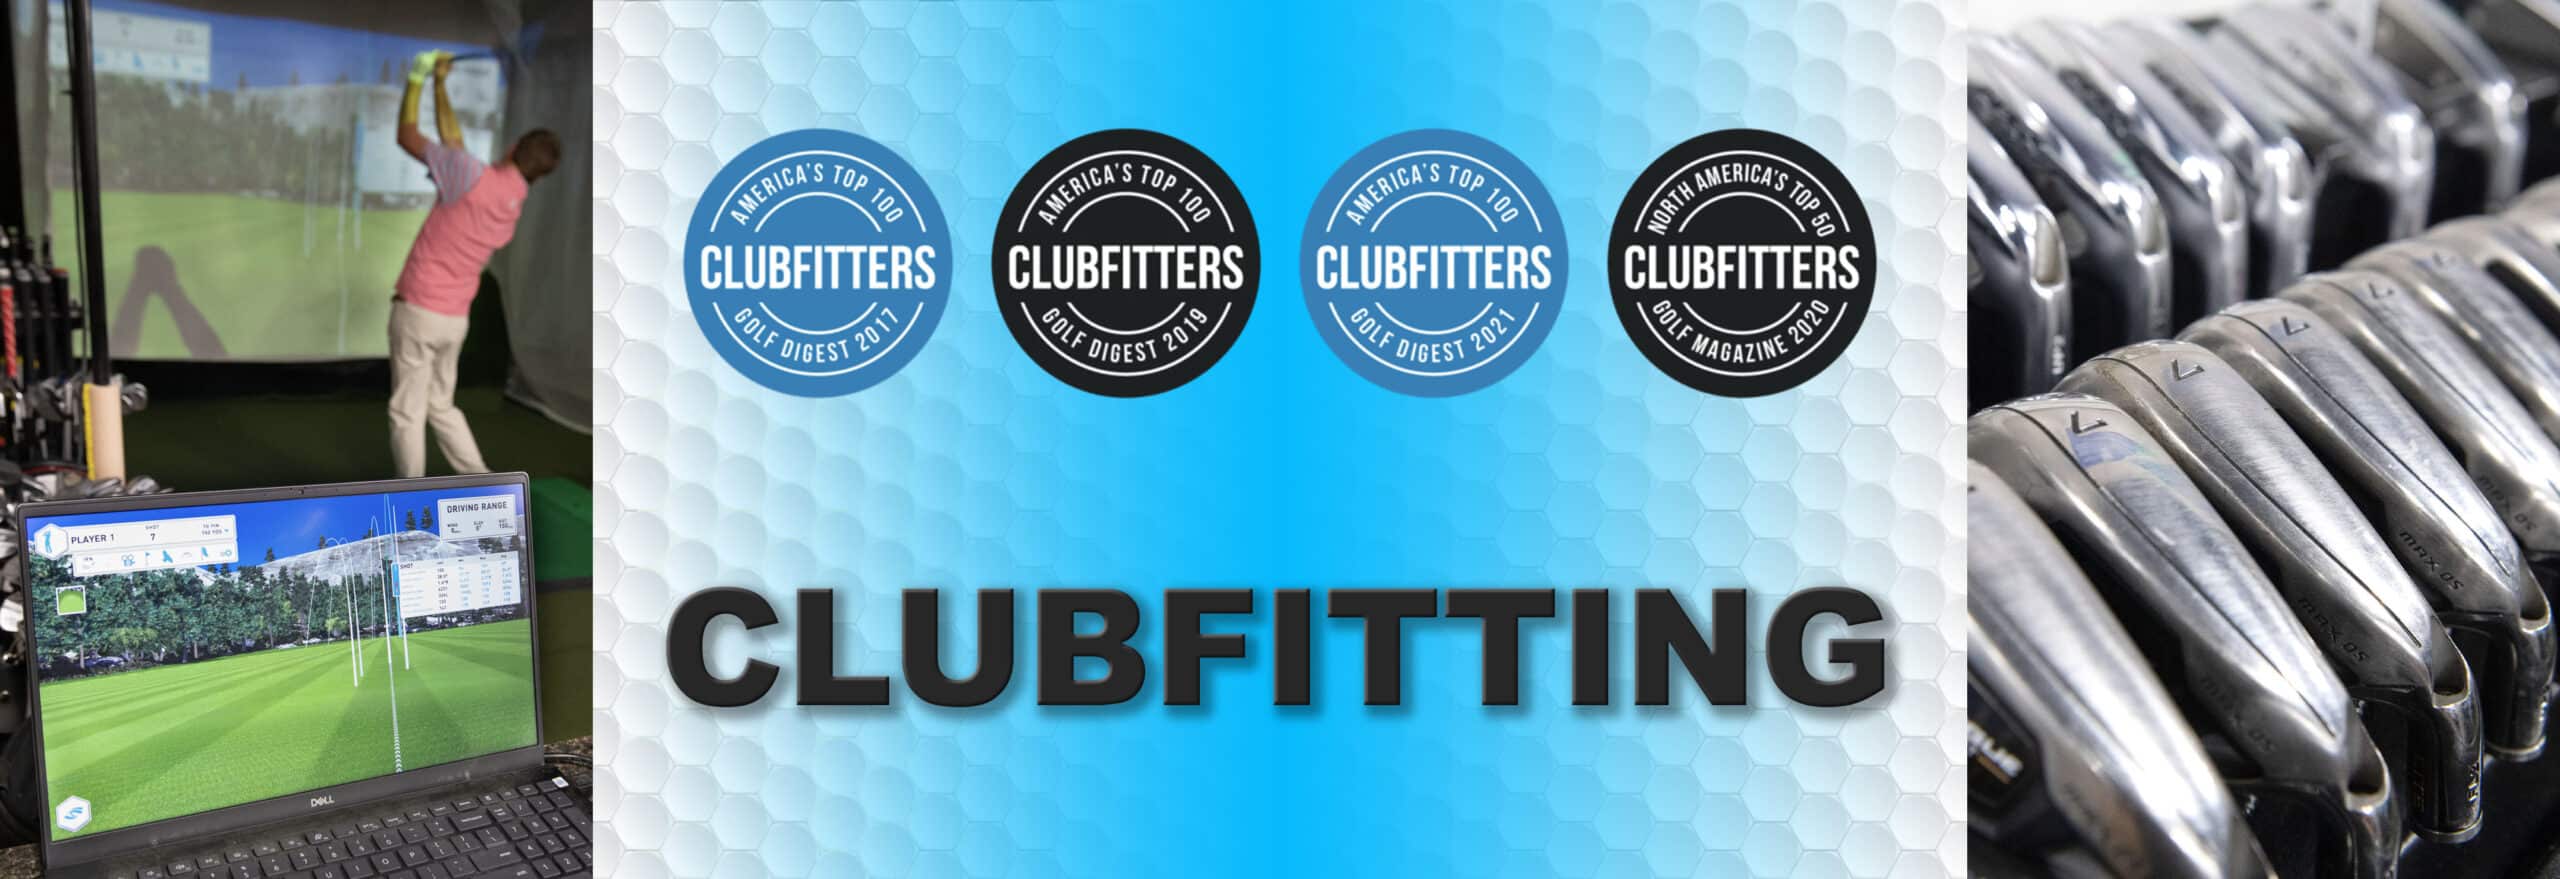 Home photo bar clubfitting scaled - Fitting Process - Sticks 96 Golf